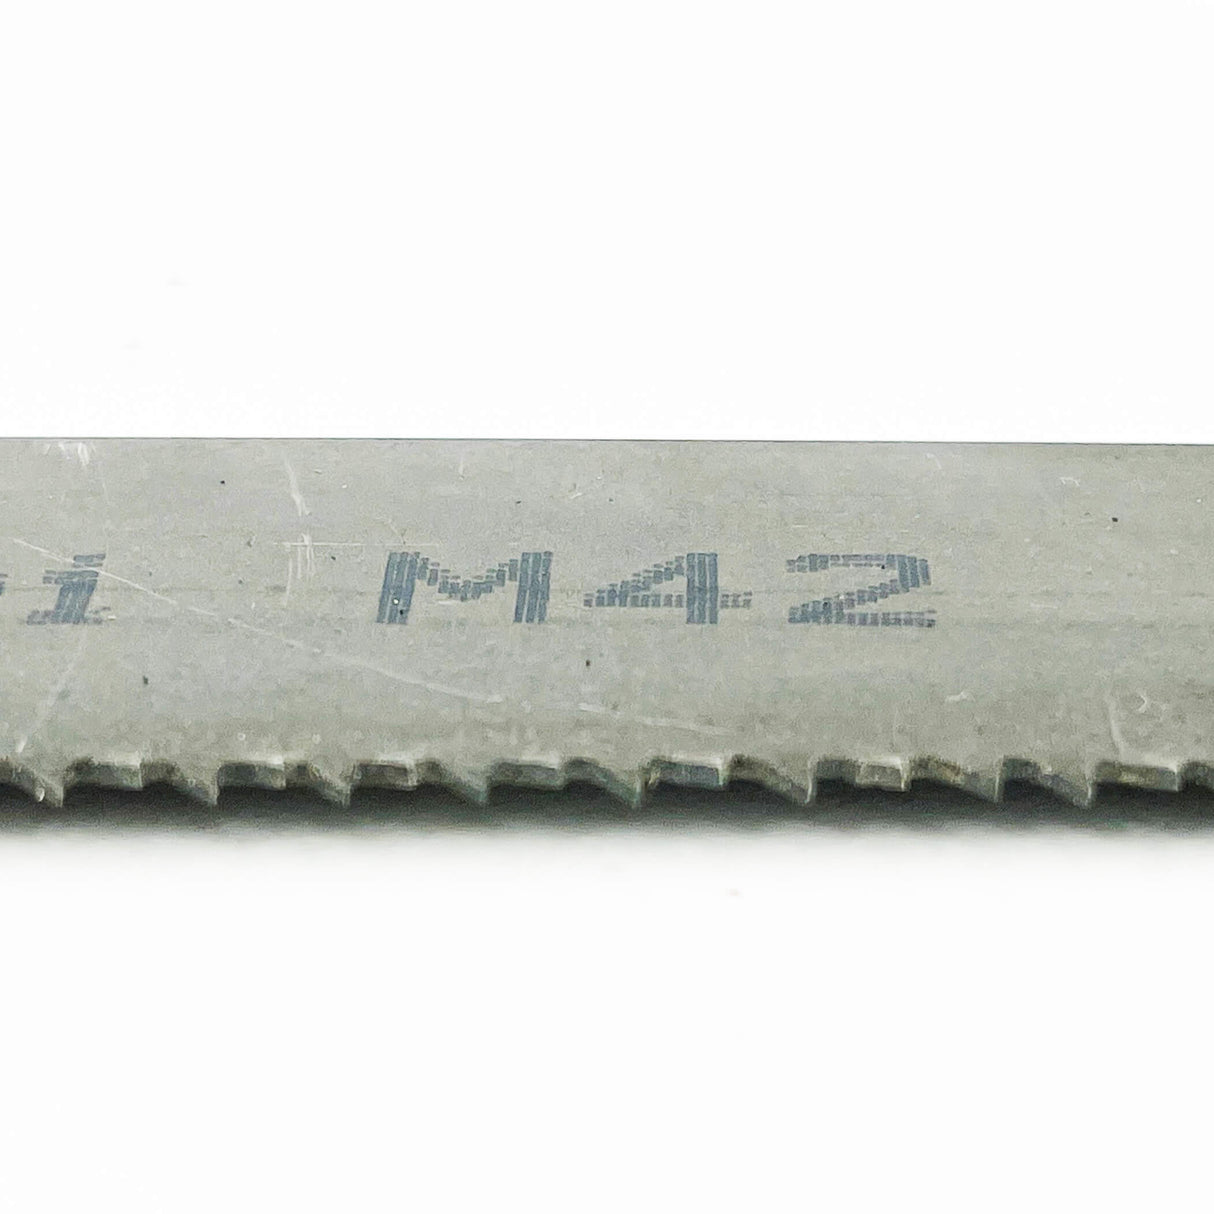 4270mm Long x 13mm Wide COBALT M42 Bi-Metal Band Saw - Pack of 2 Blades